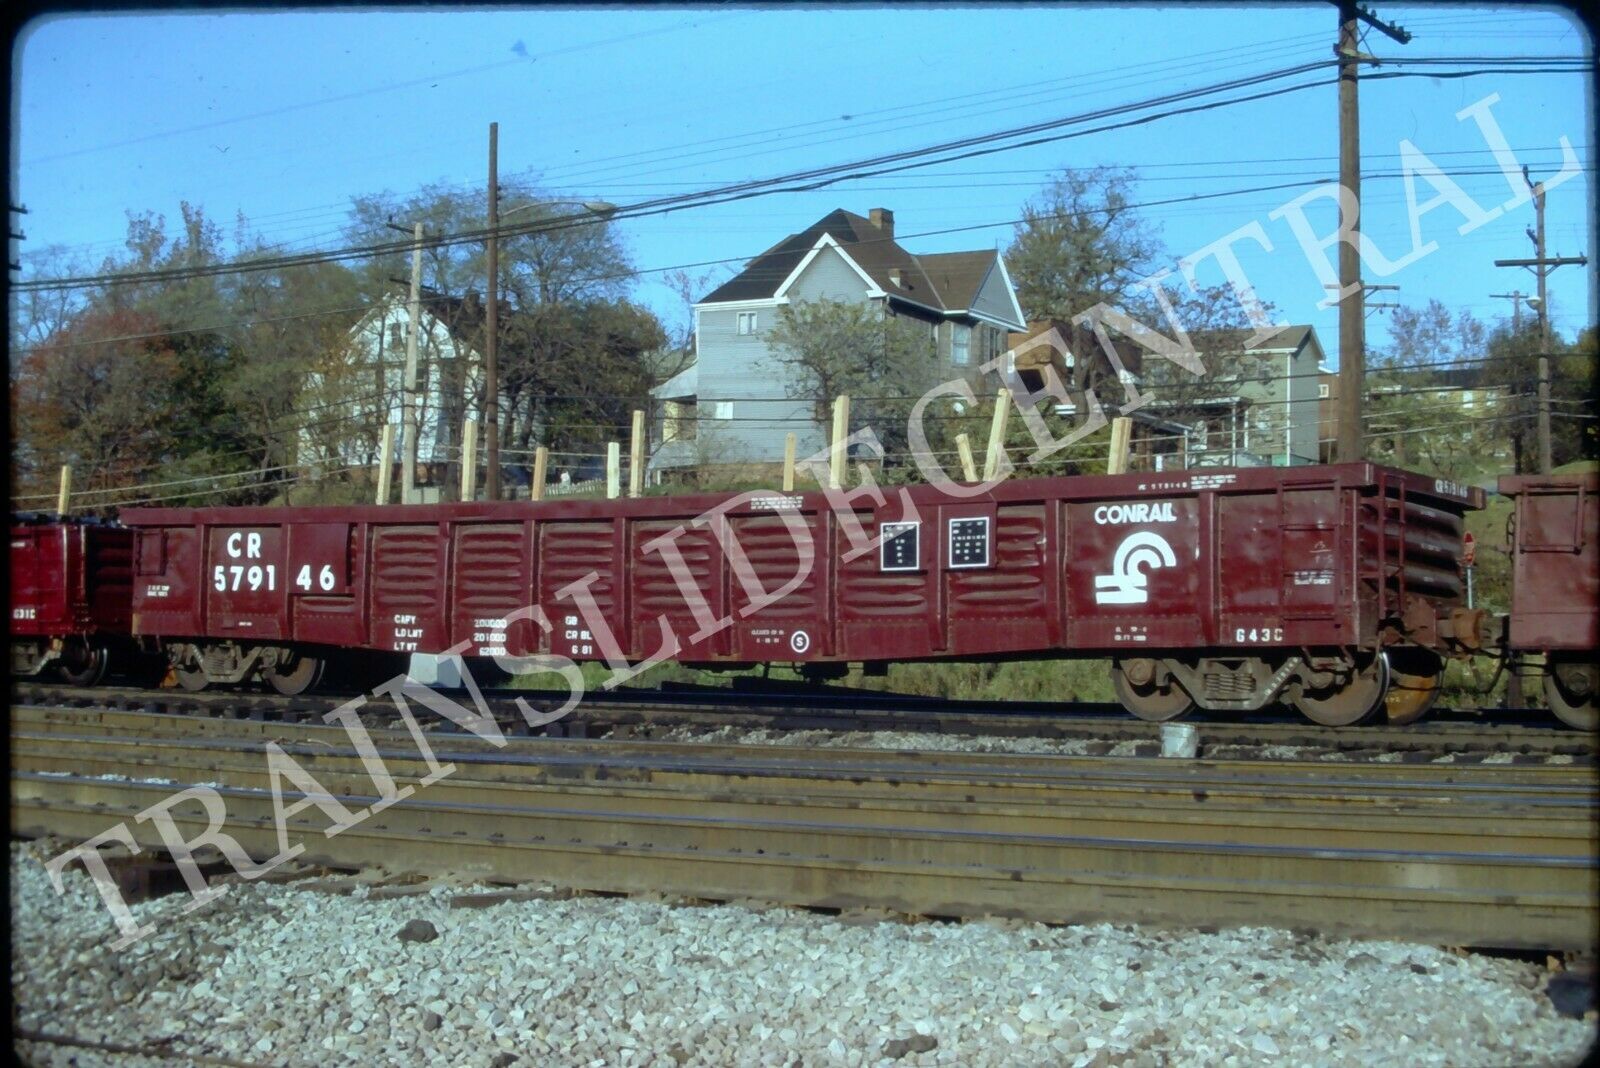 Original Train Slide Cr Conrail Gondola 579146, 1981